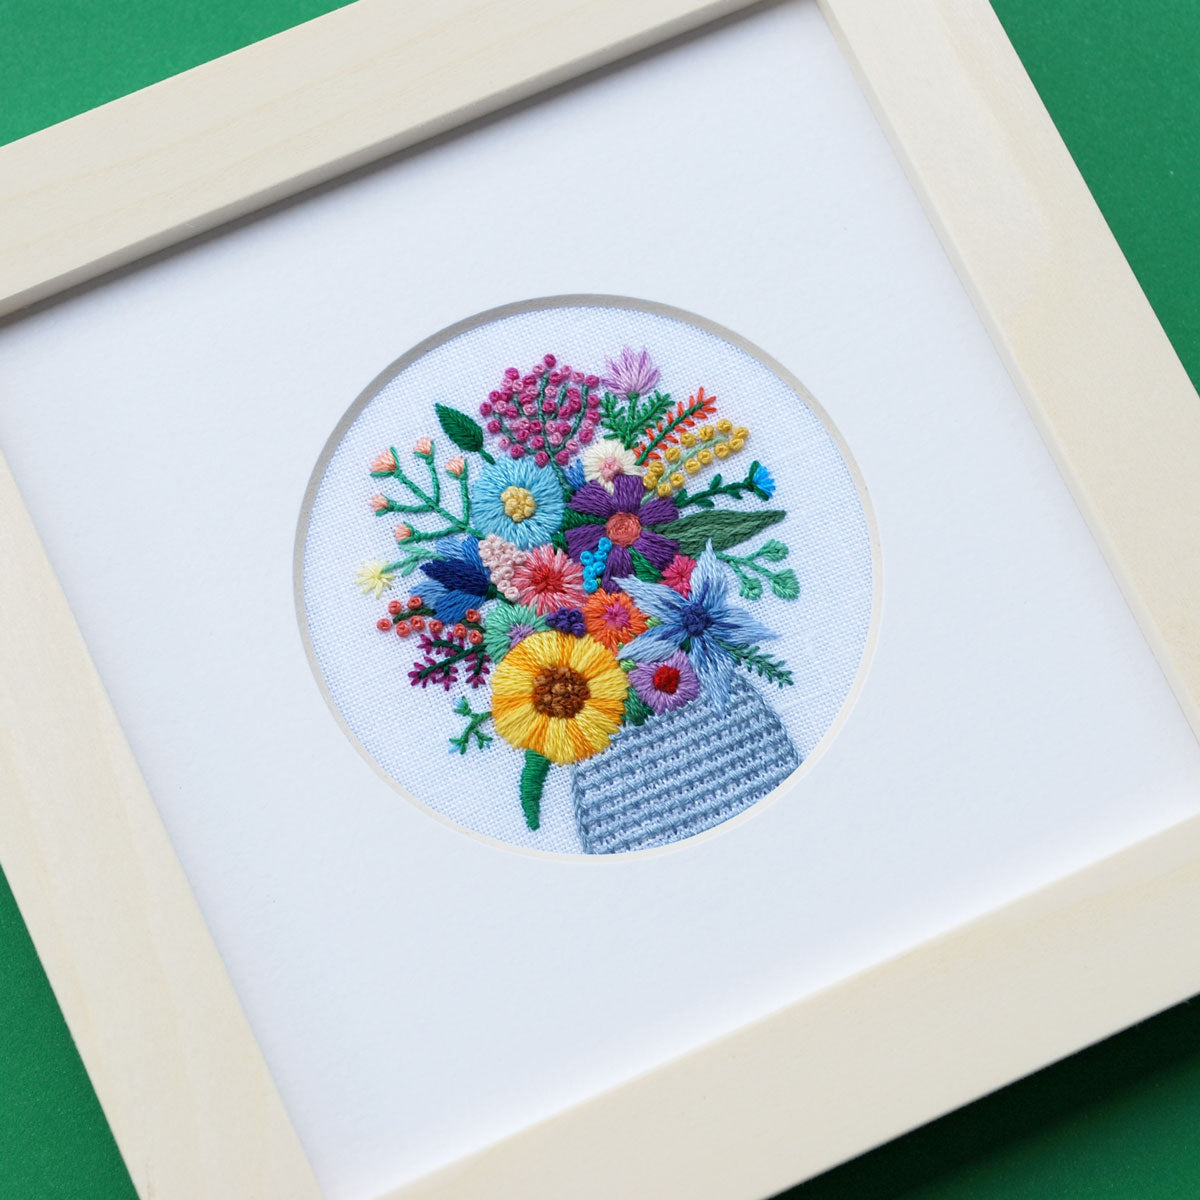 Flowers in Vase (2.75") on White Linen Hand Embroidered Art